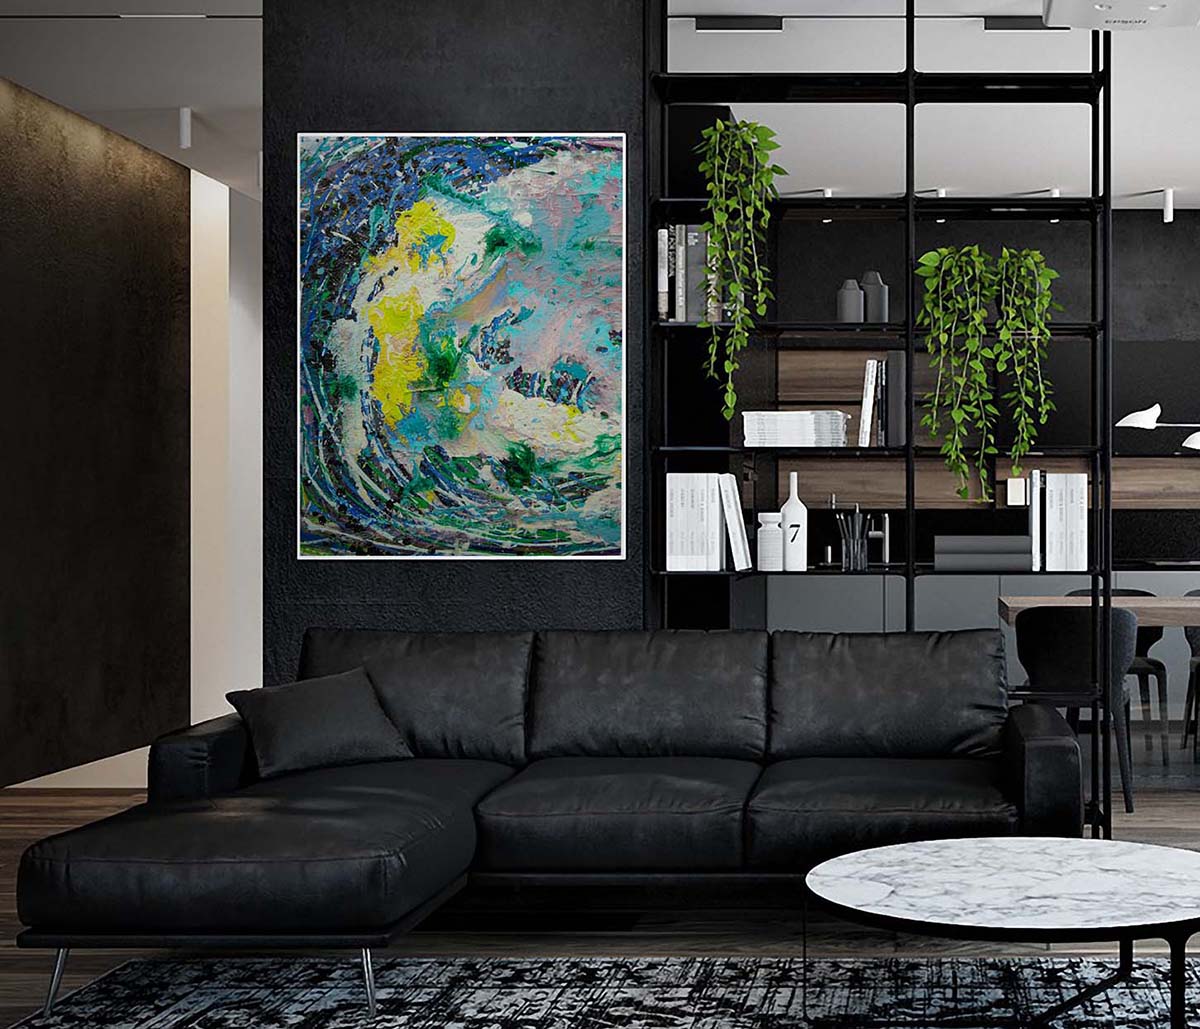 Abstract 21 Tsunami art by Doug LaRue on a modern living room wall